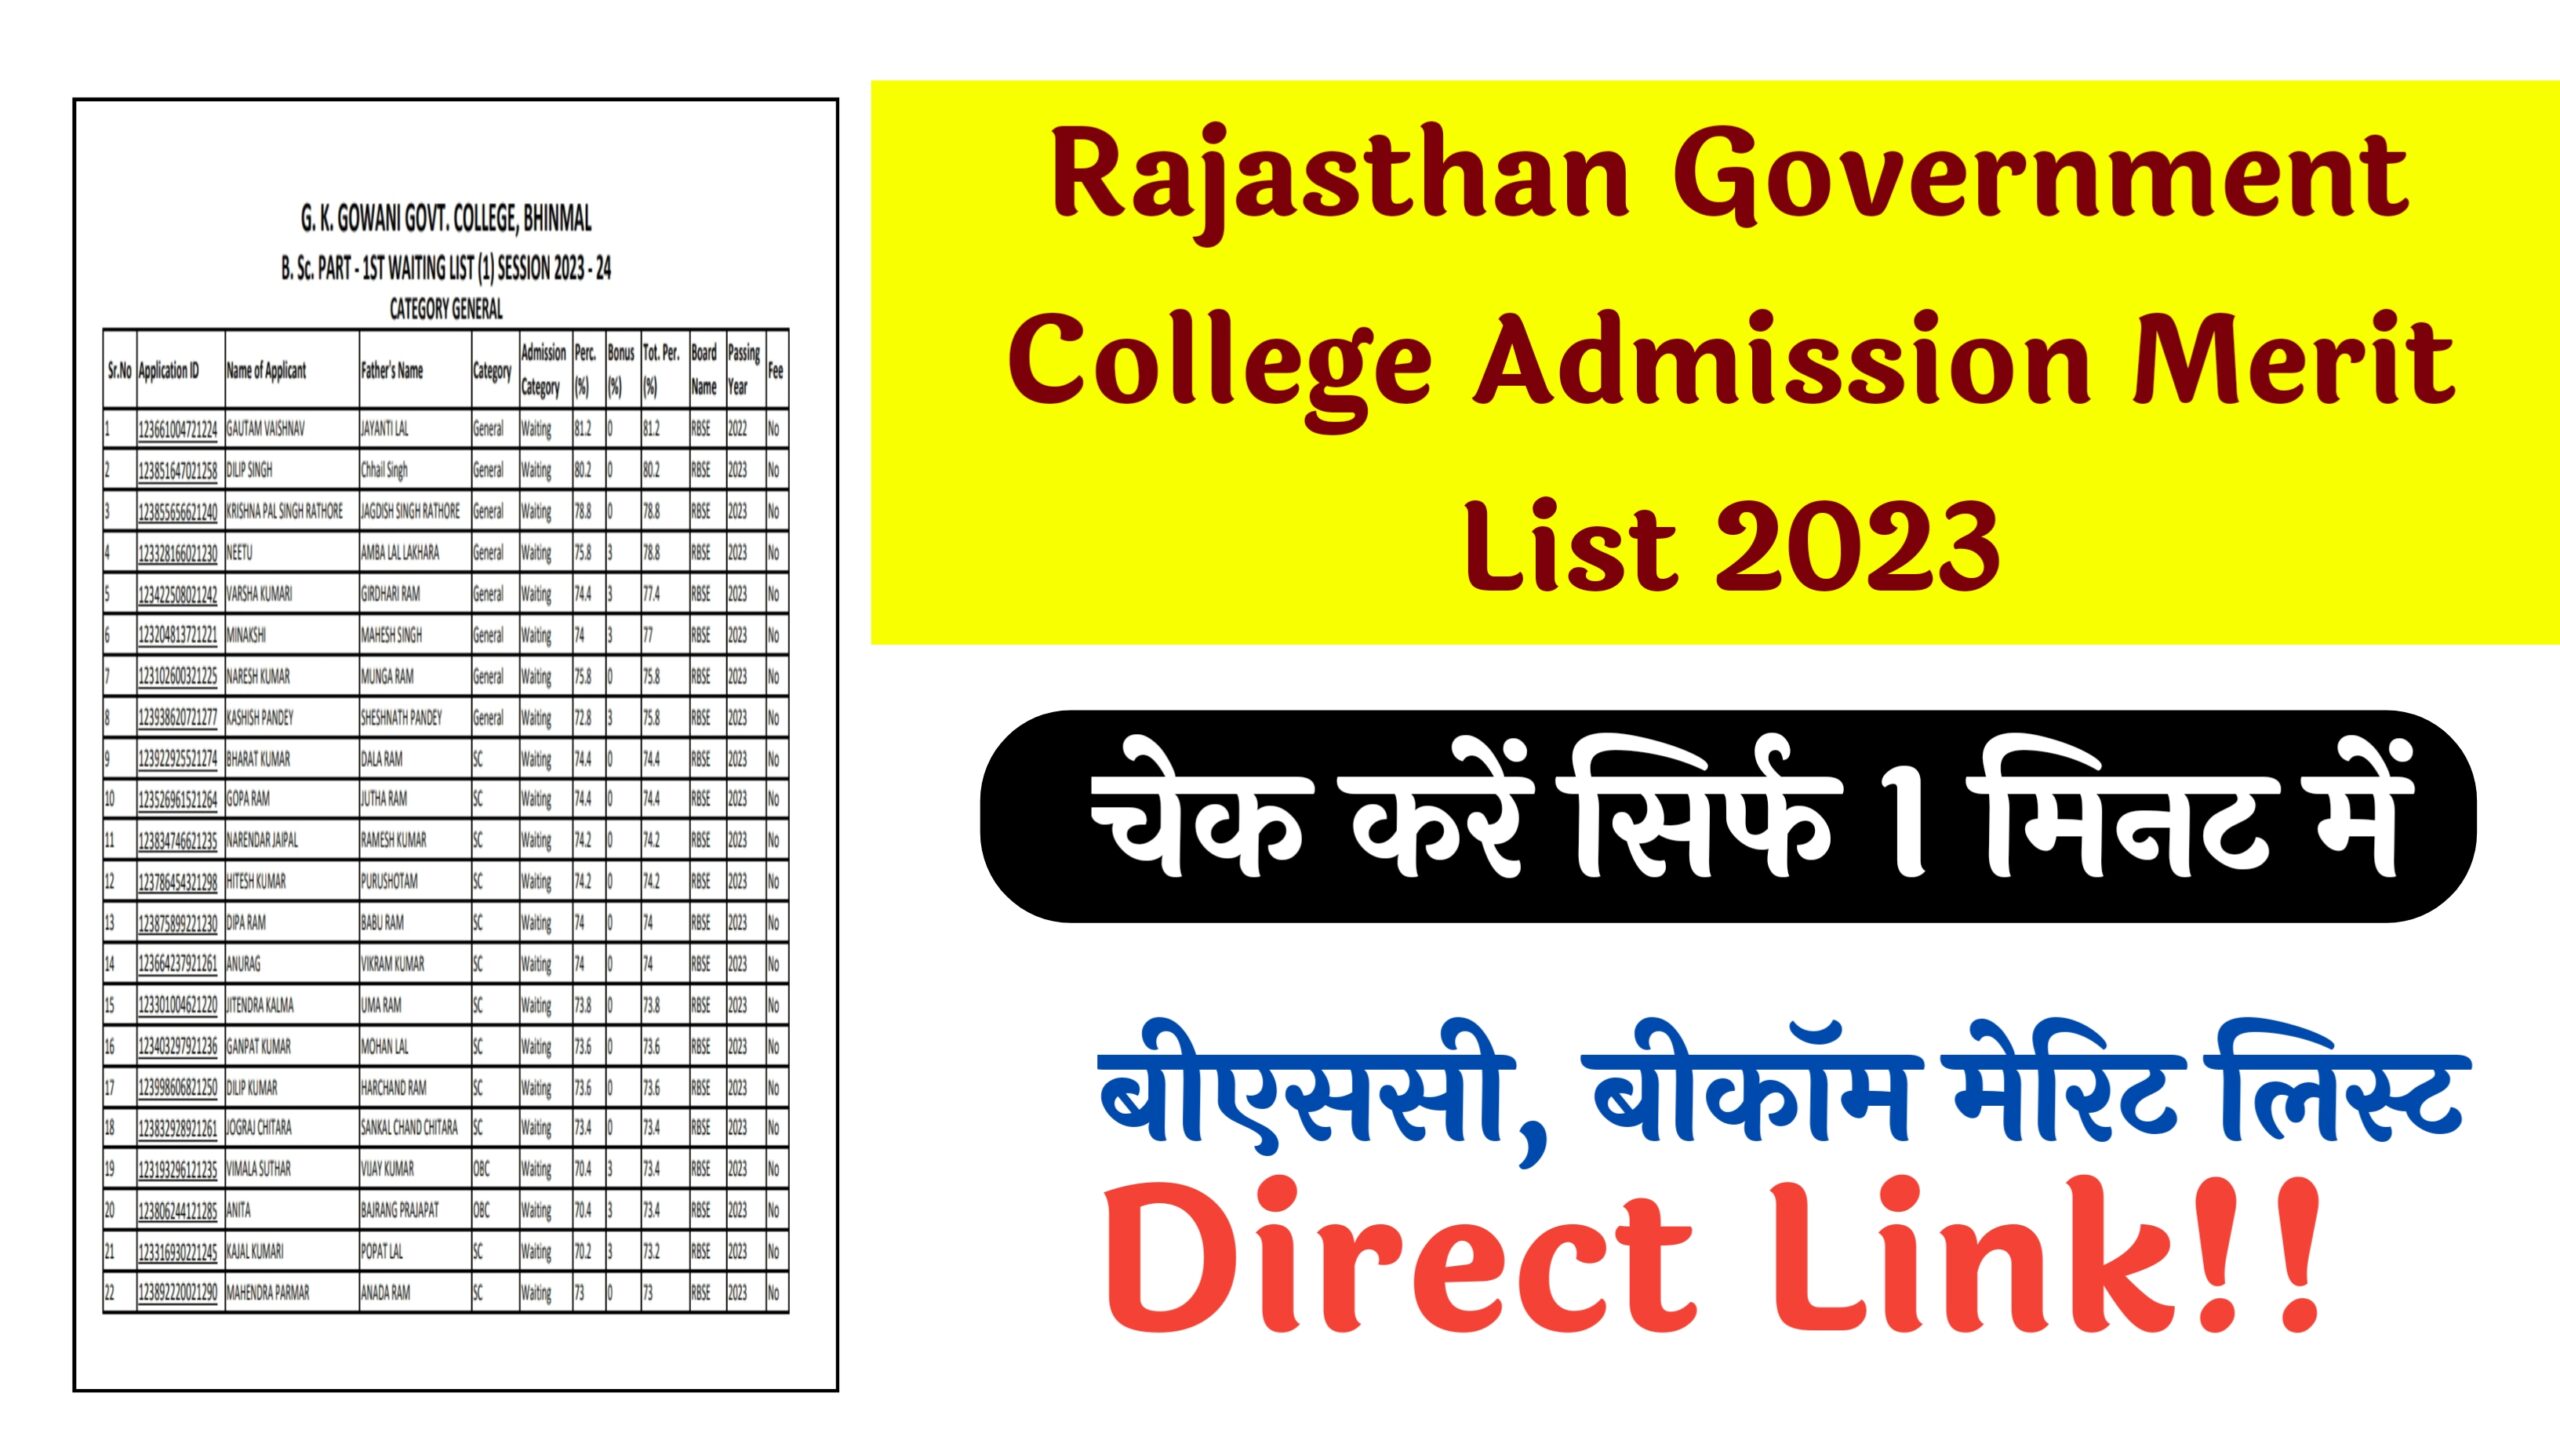 Rajasthan Government College Admission Merit List 2023